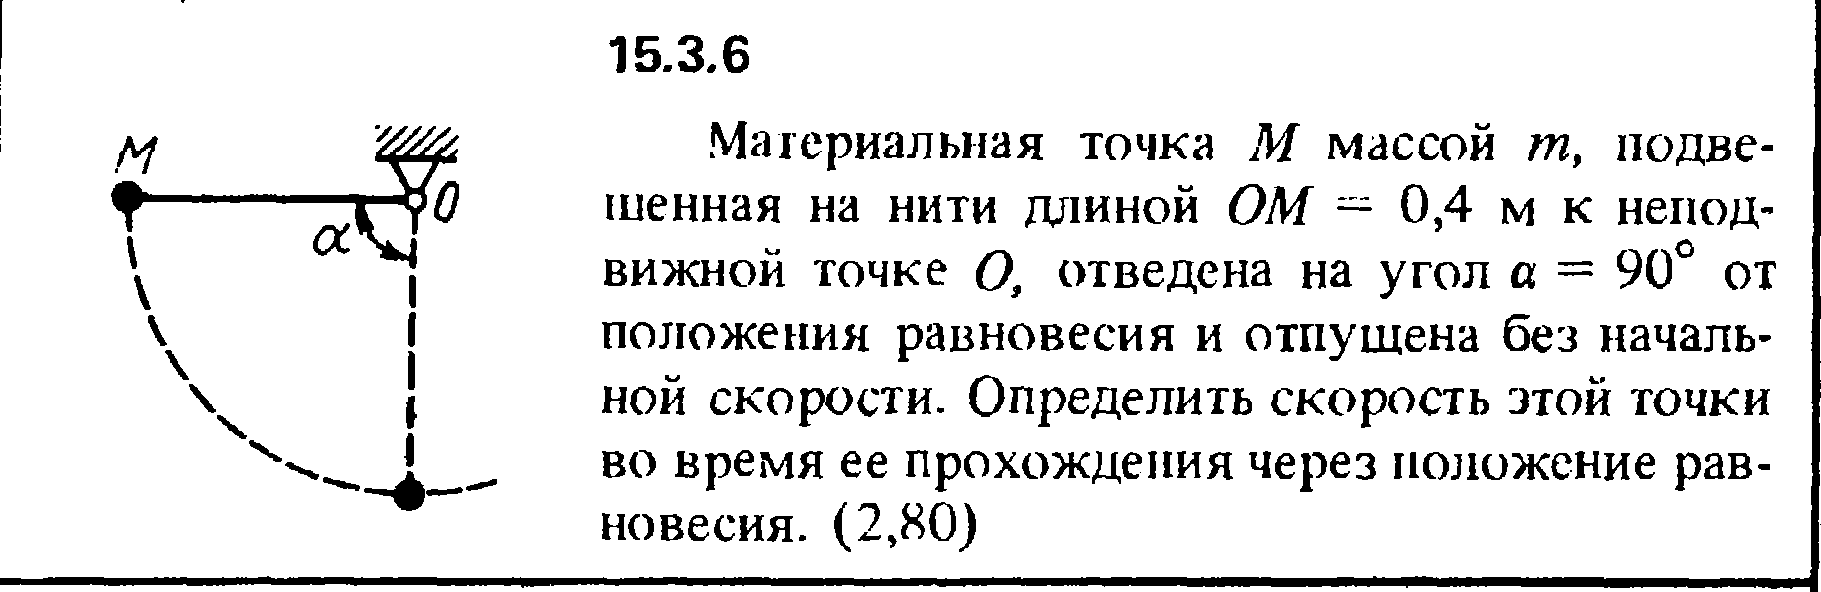 Решение задачи 15.3.6 из сборника Кепе О.Е. 1989 года